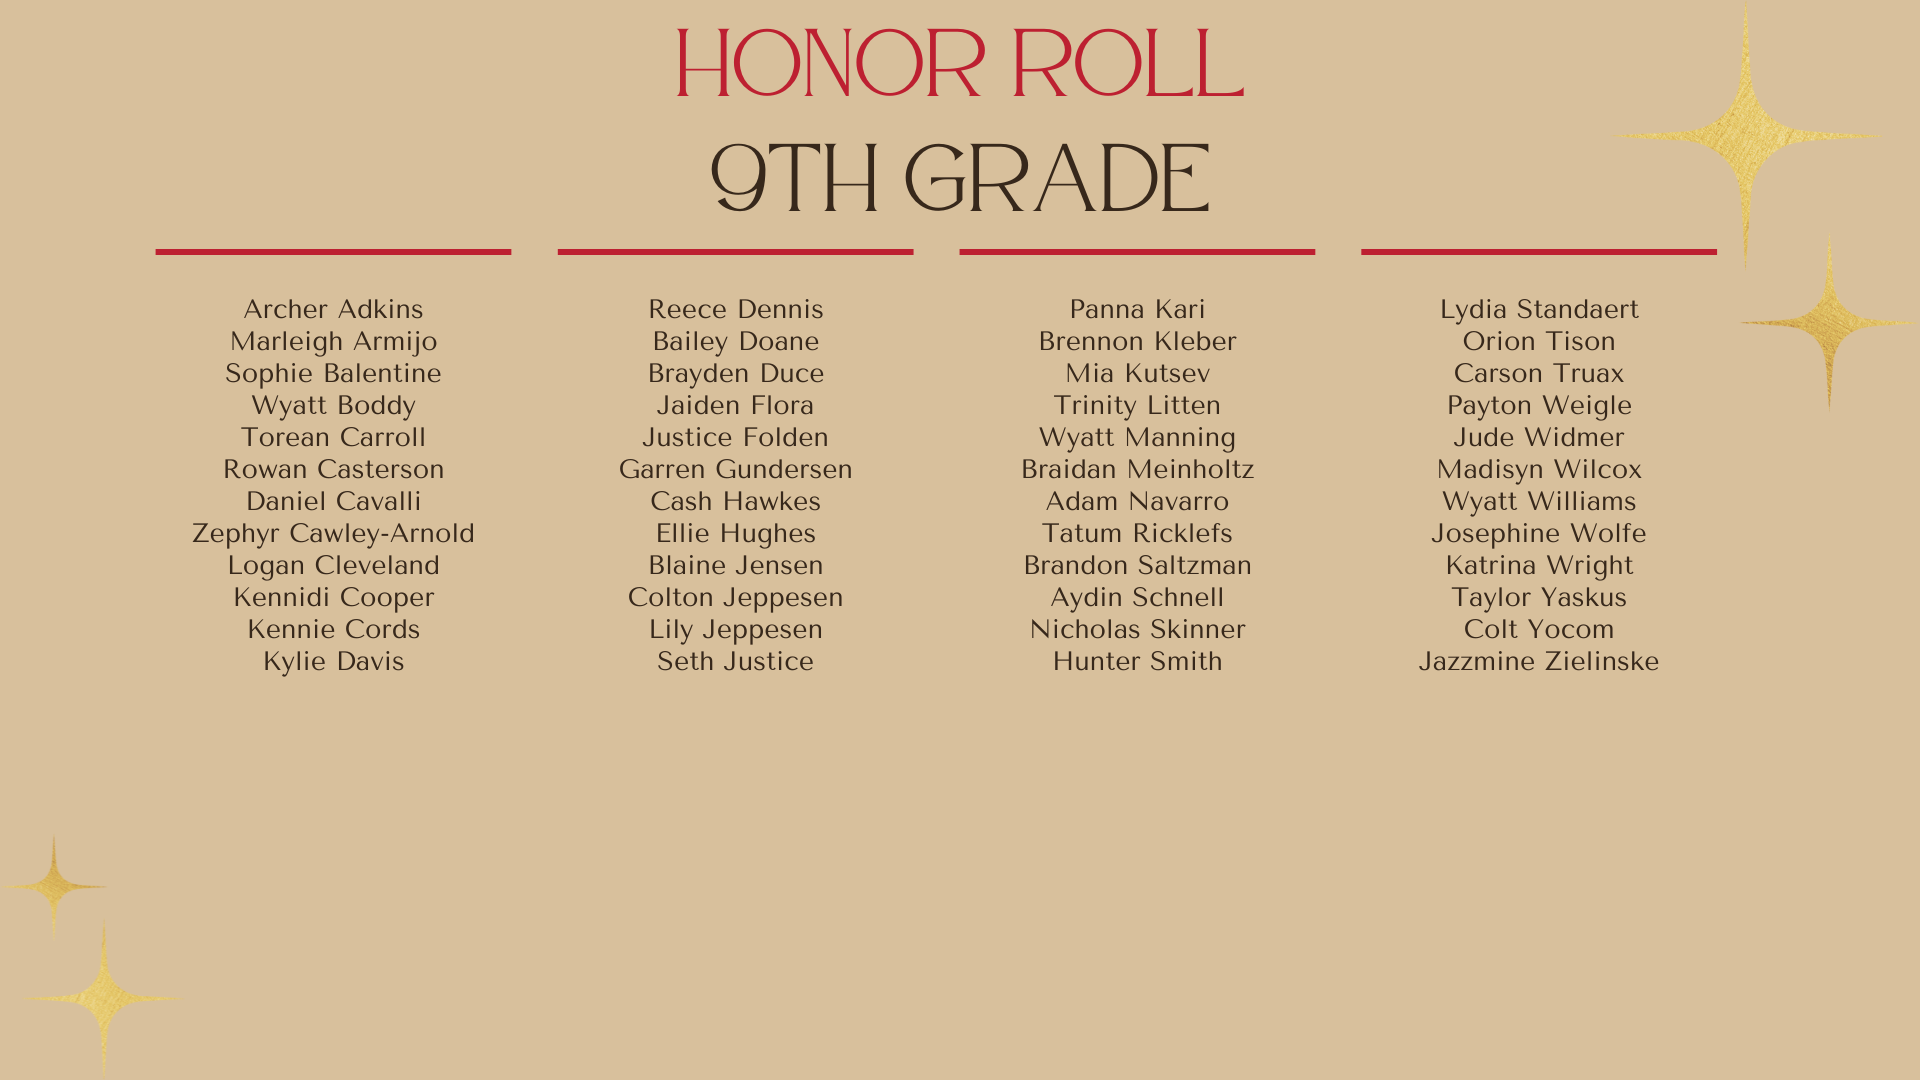 Honor Roll 9th grade